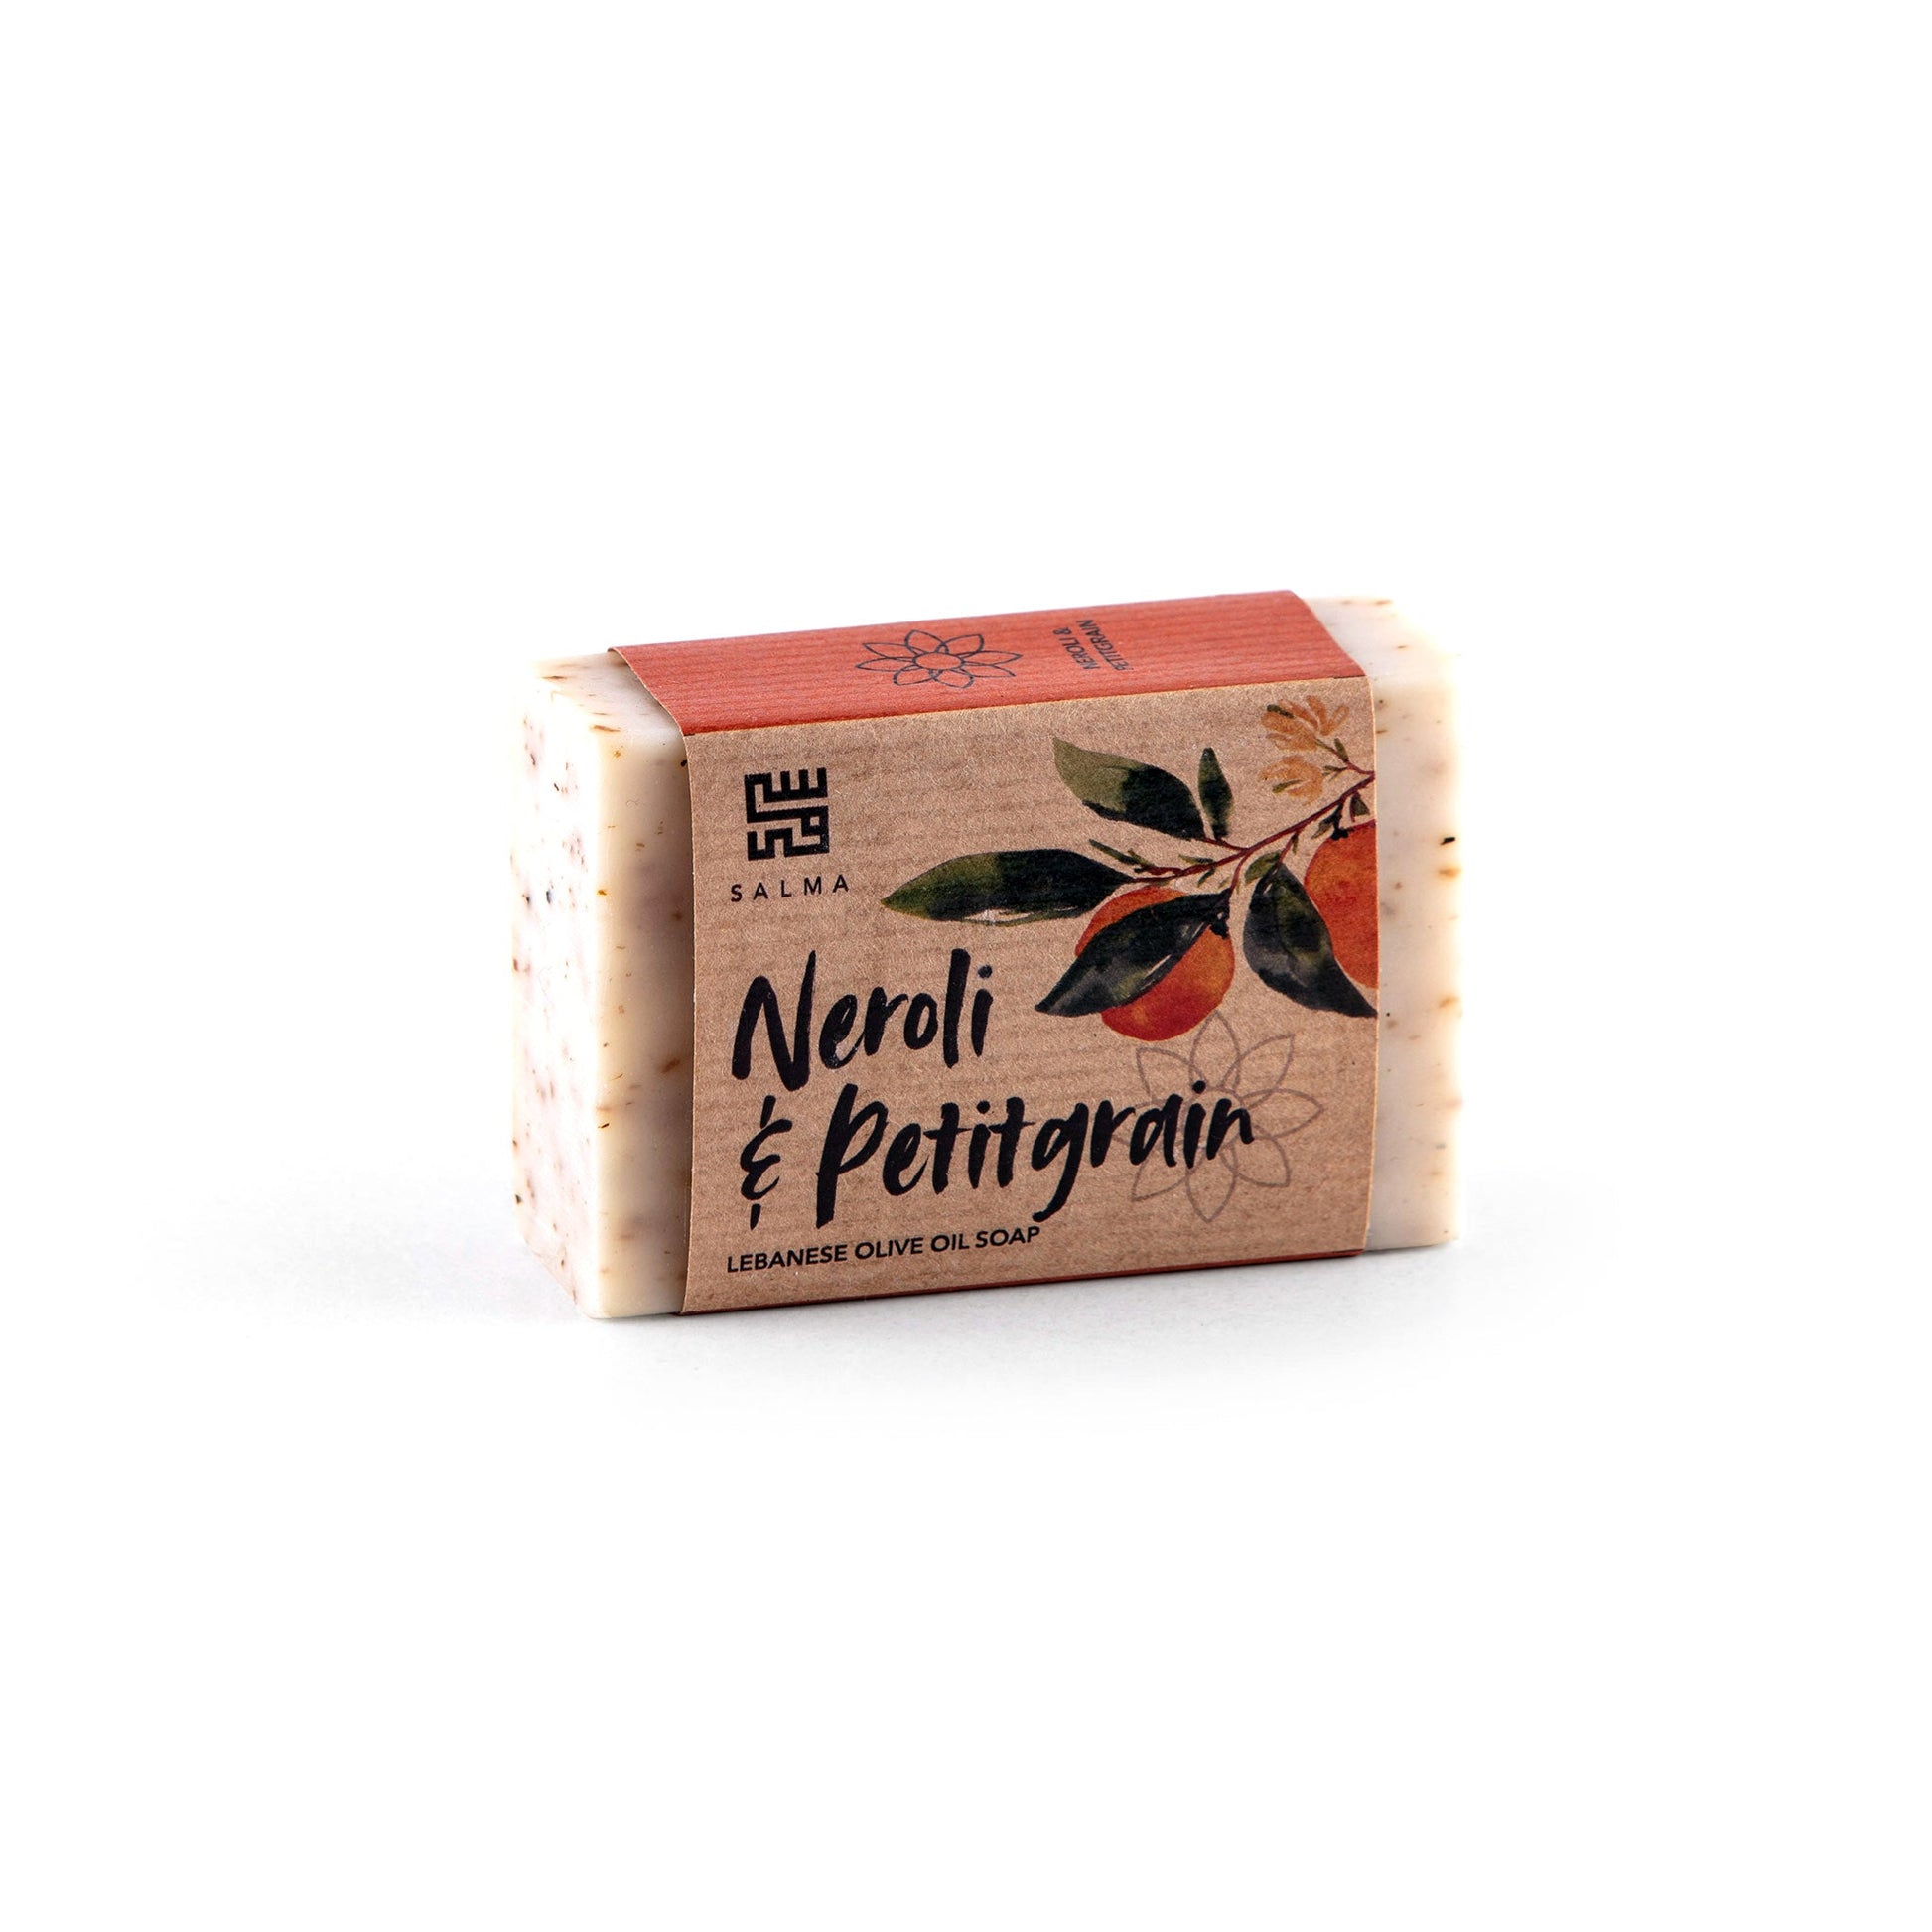 Nerroli and Petitgrain Soap Bar - The Earthen Hollow